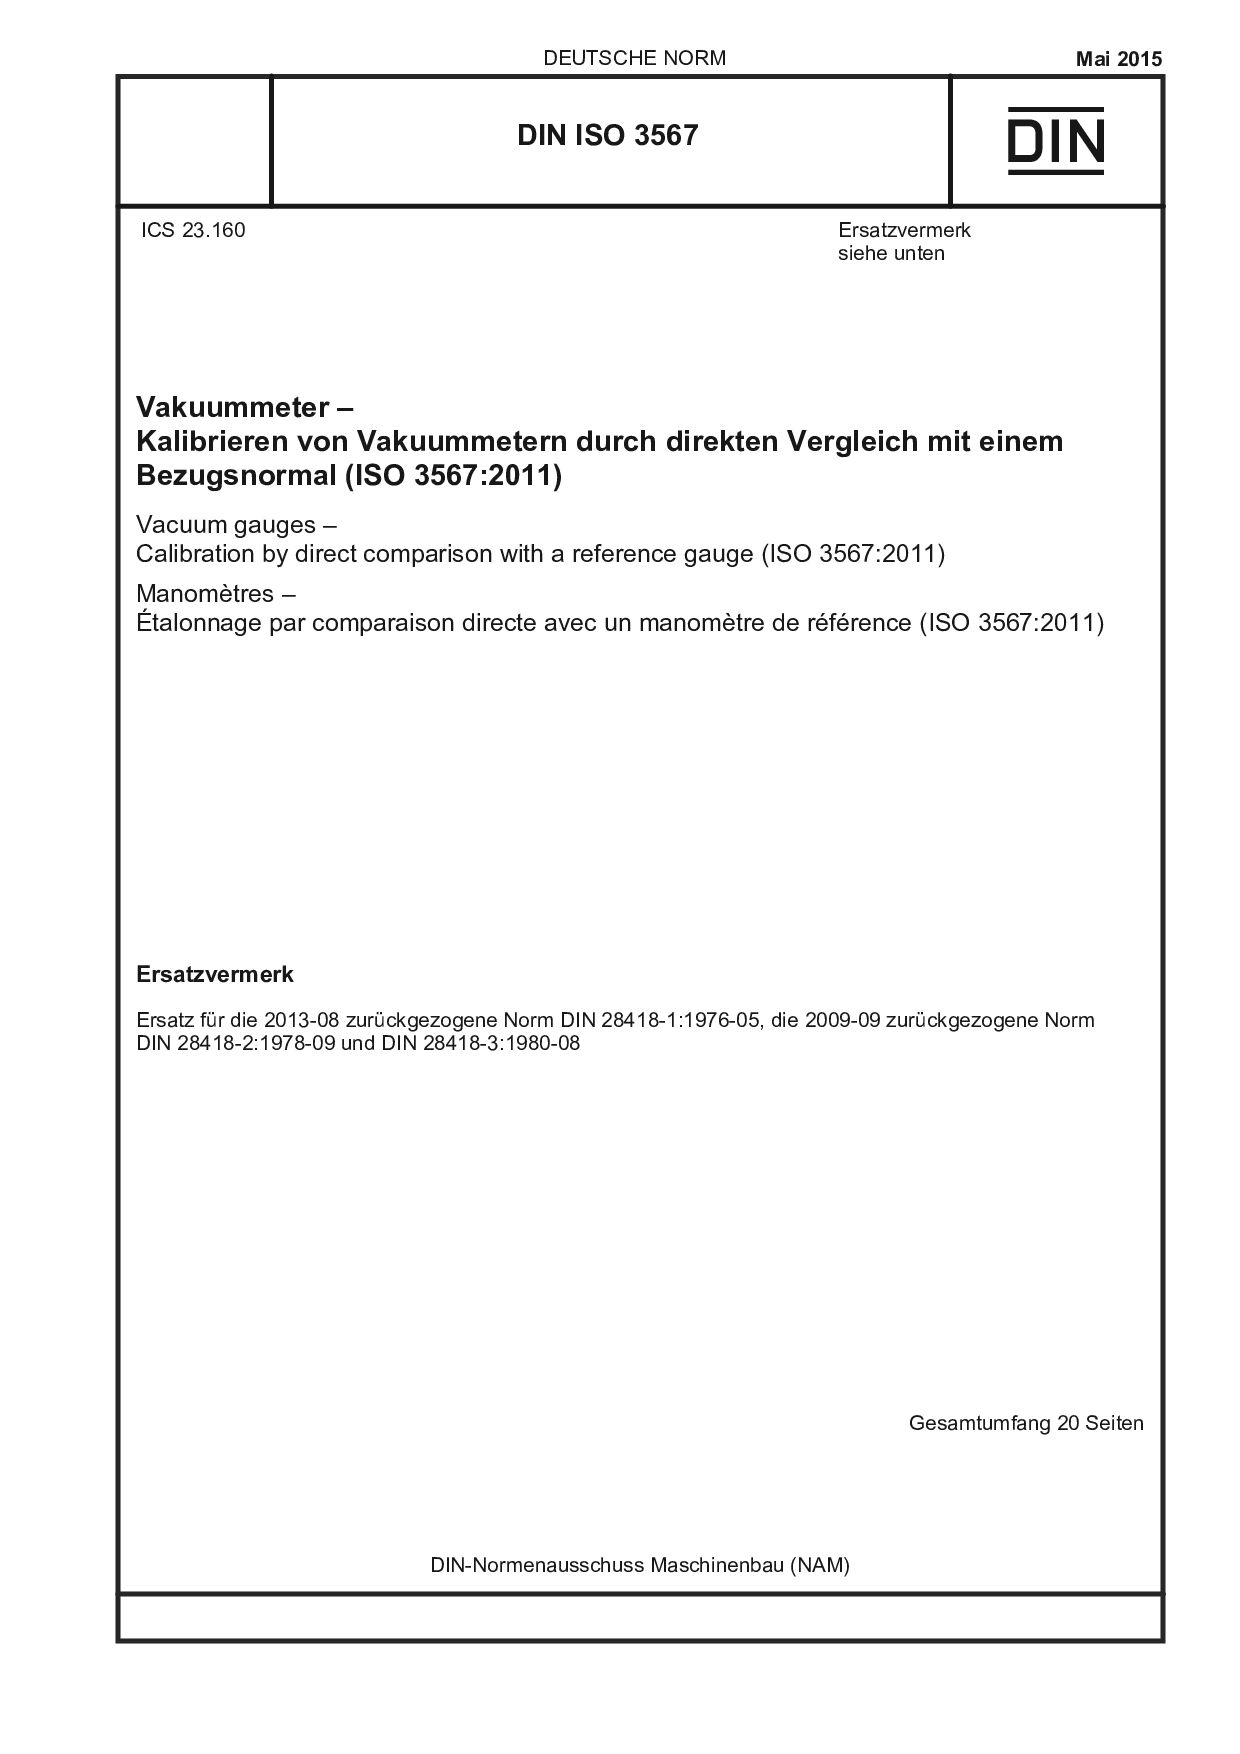 DIN ISO 3567:2015-05